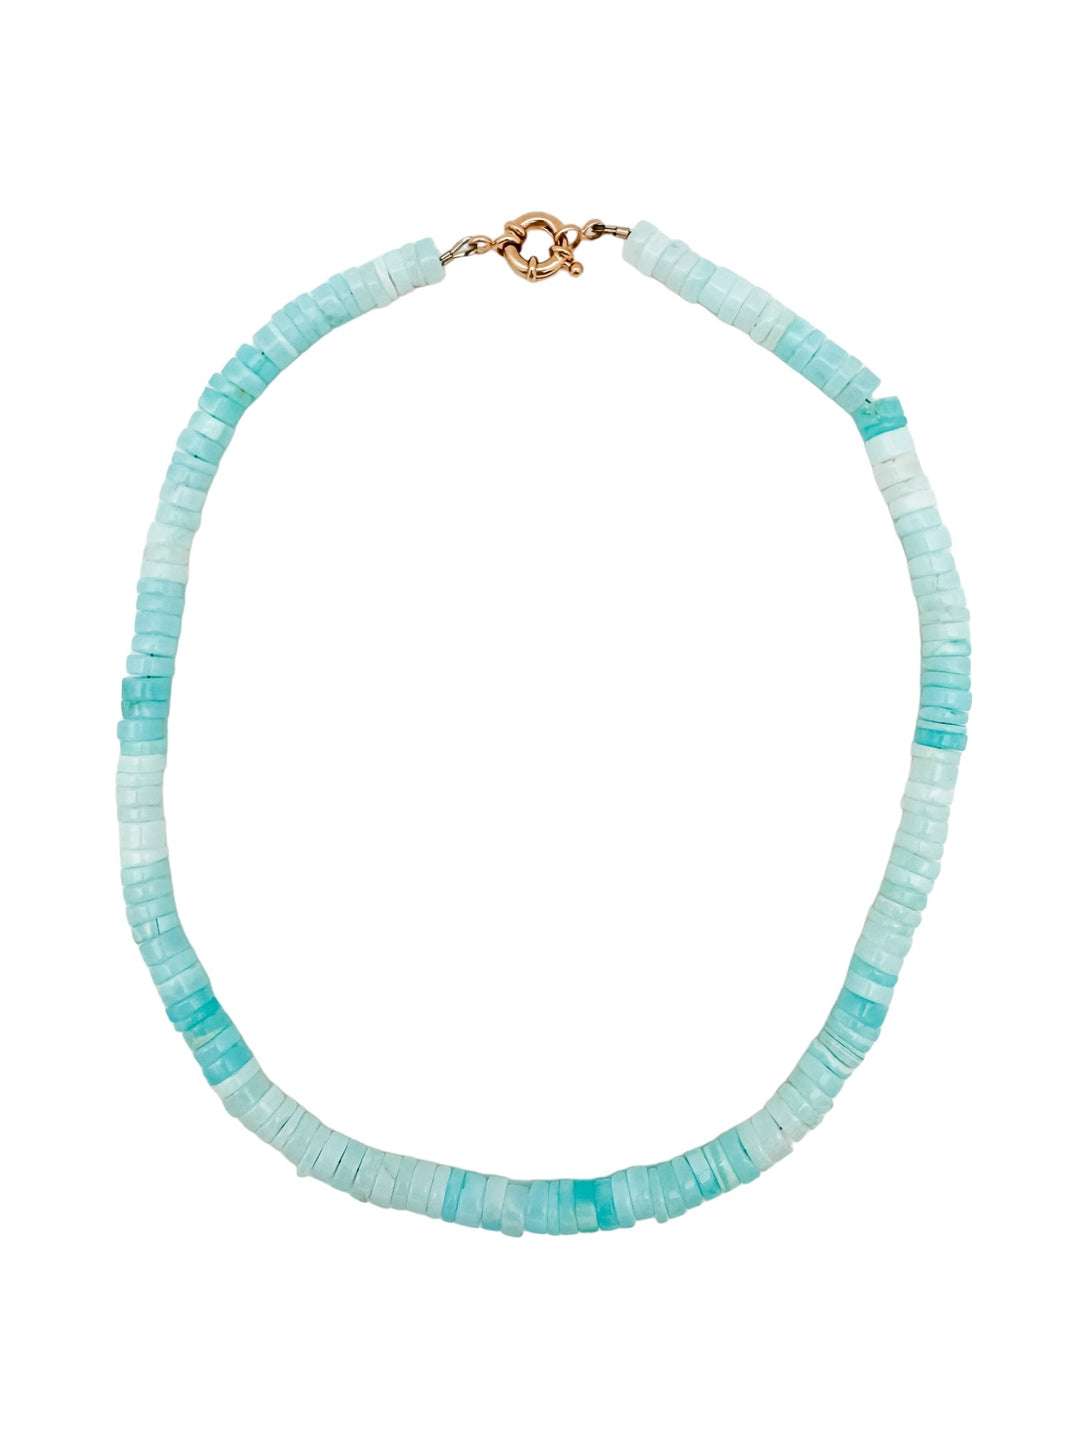 Seafoam blue opal, gemstone necklace